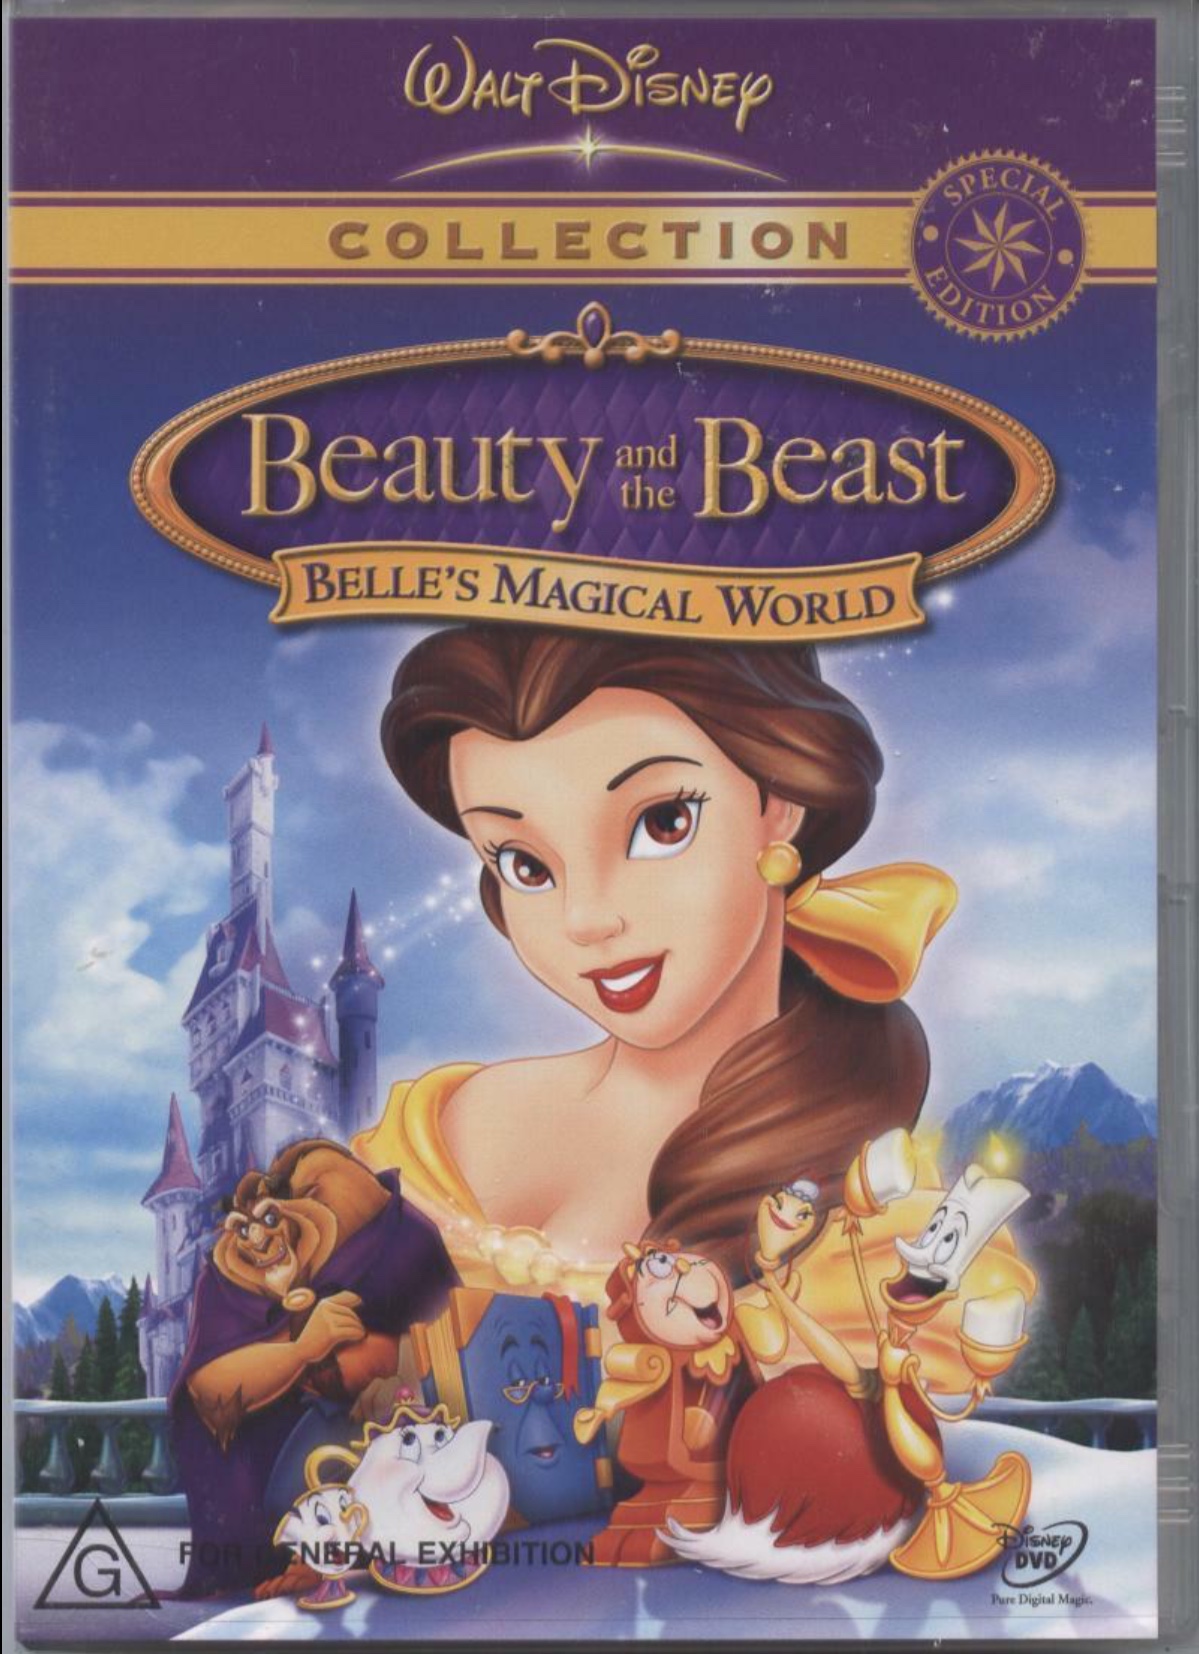 Beauty and the Beast (1991 soundtrack) - Wikipedia